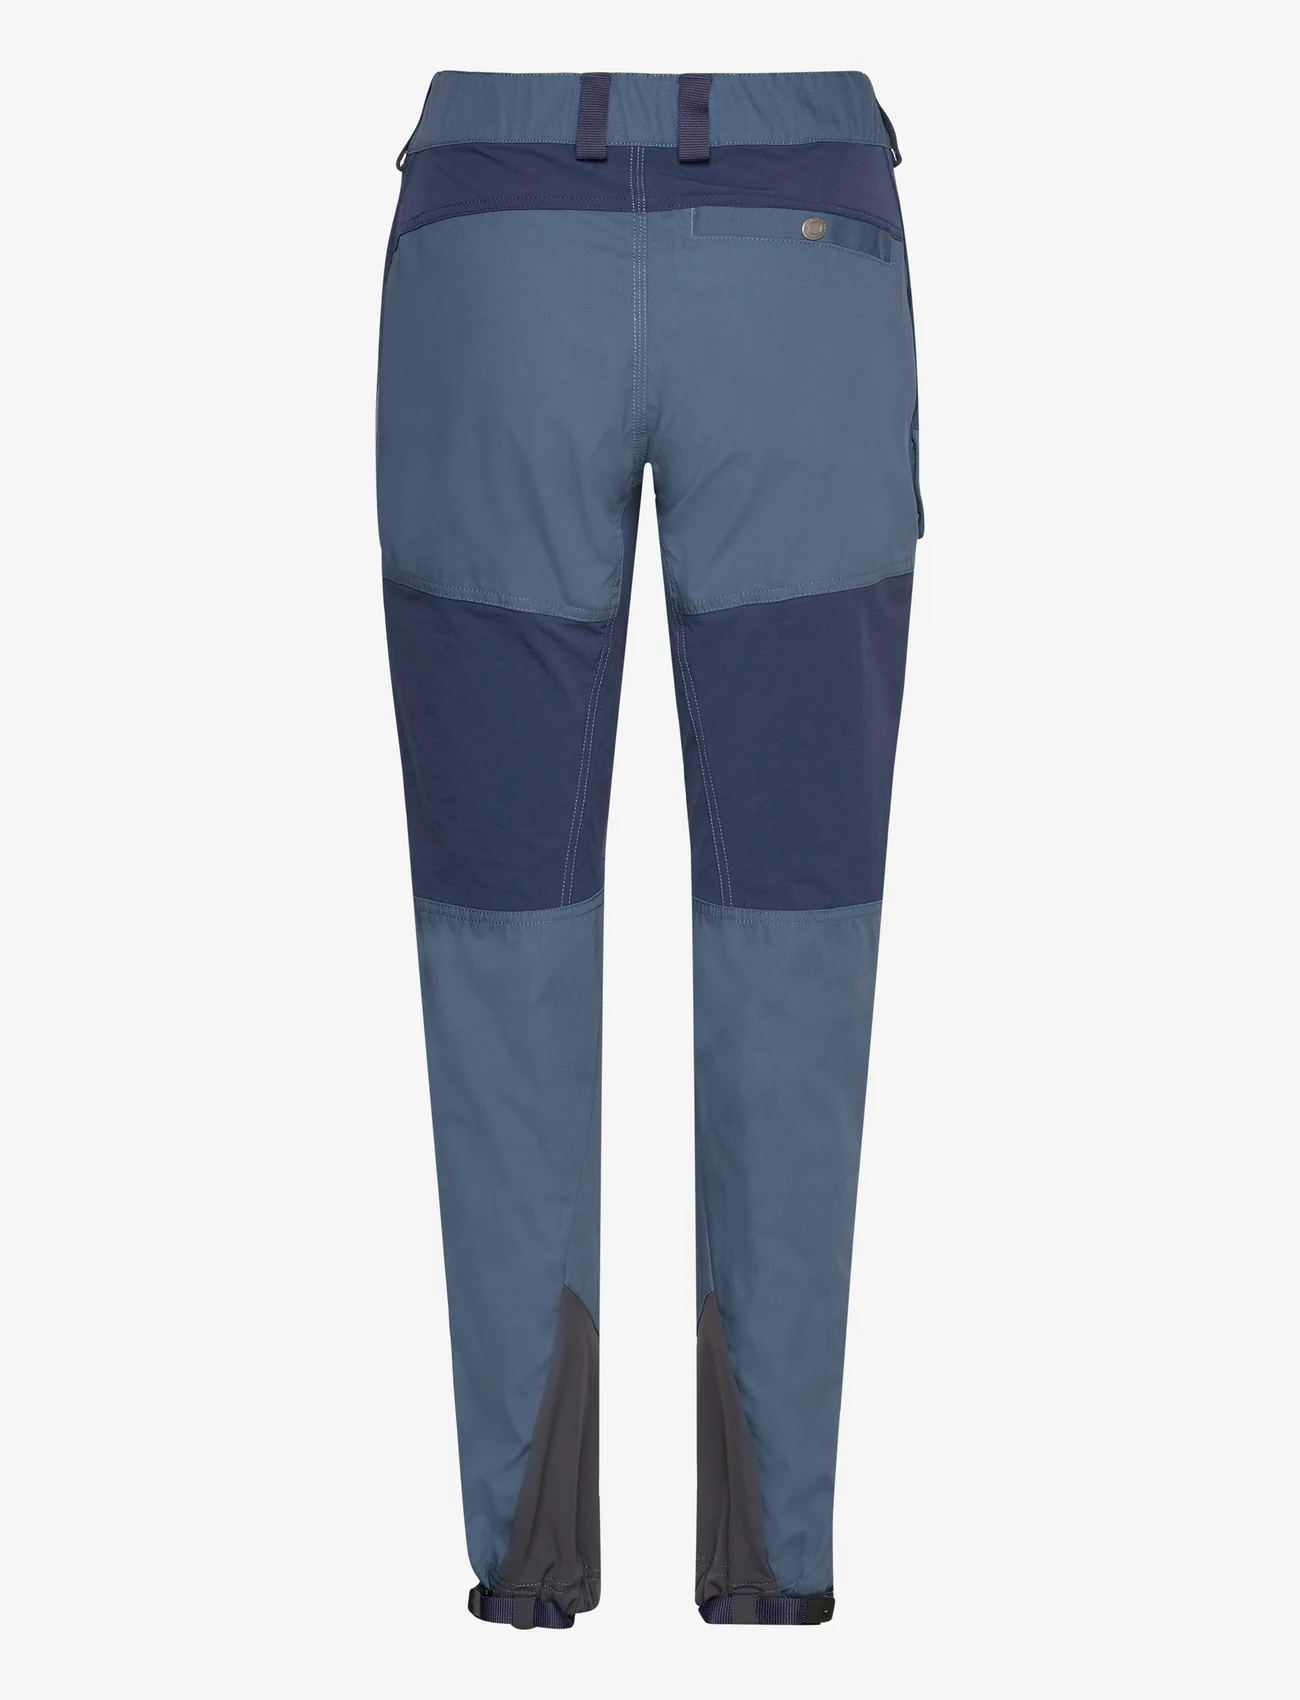 Bergans - Nordmarka Favor Outdoor Pants Women - plus size - orion blue/navy blue - 1